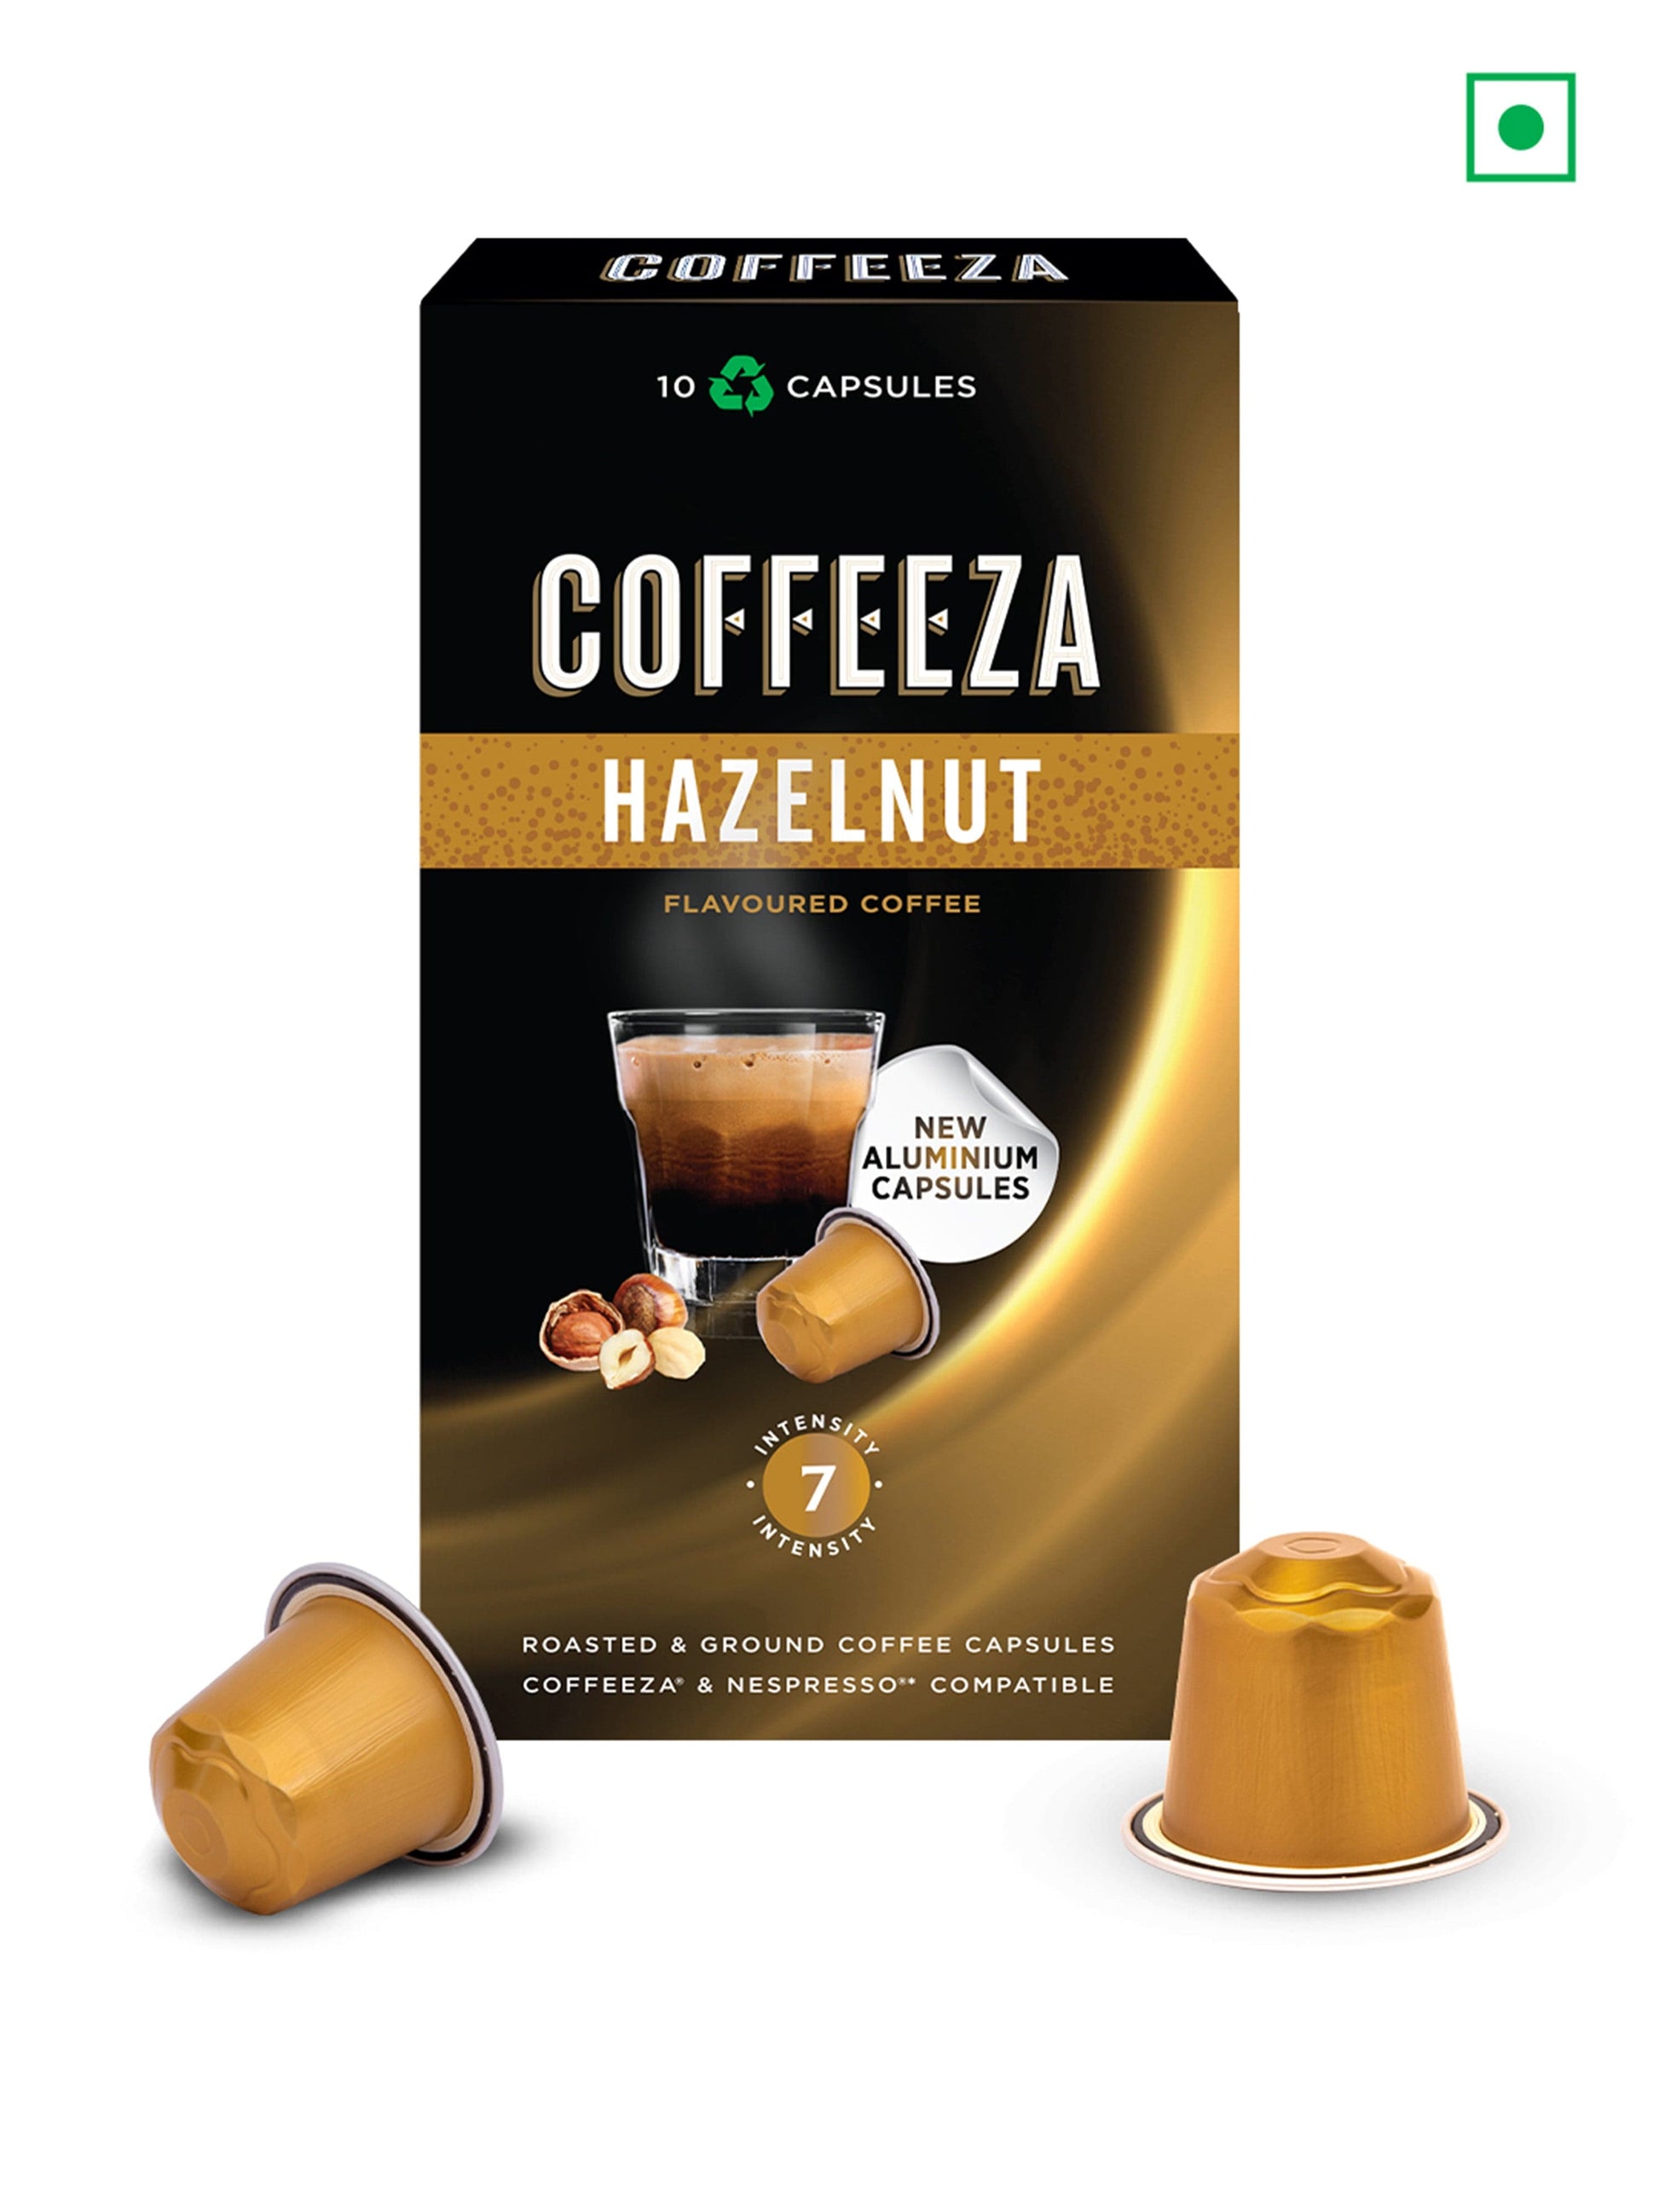 Coffeeza Coffee capsules COFFEEZA Flavoured Variety Pack Hazelnut, Vanilla, Caramel Aluminium Coffee Capsules (30 Pods)